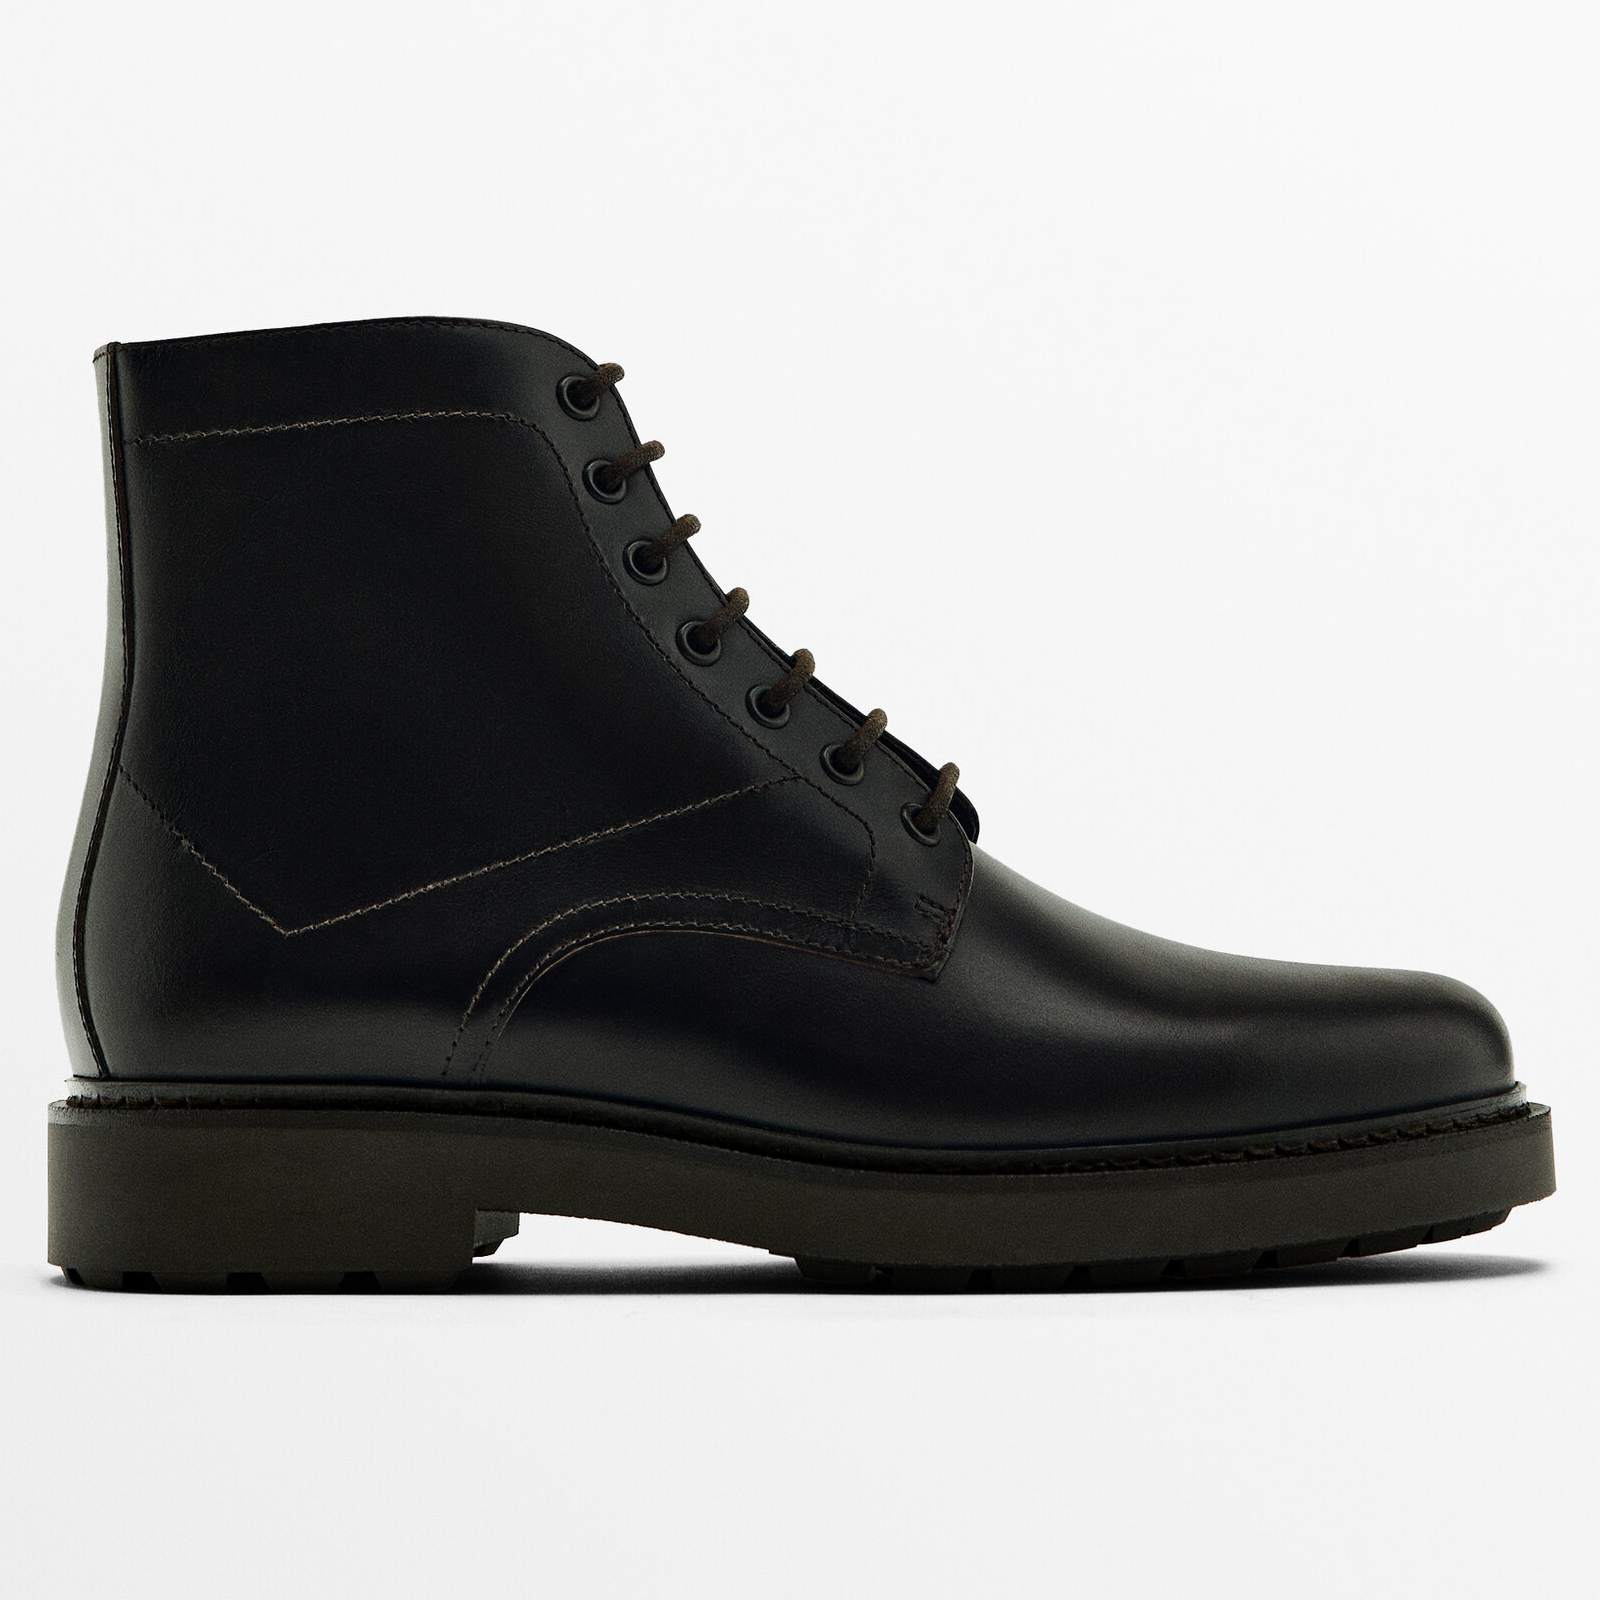 Ботинки Massimo Dutti Leather, темно-коричневый ботинки massimo dutti leather boots limited edition коричневый